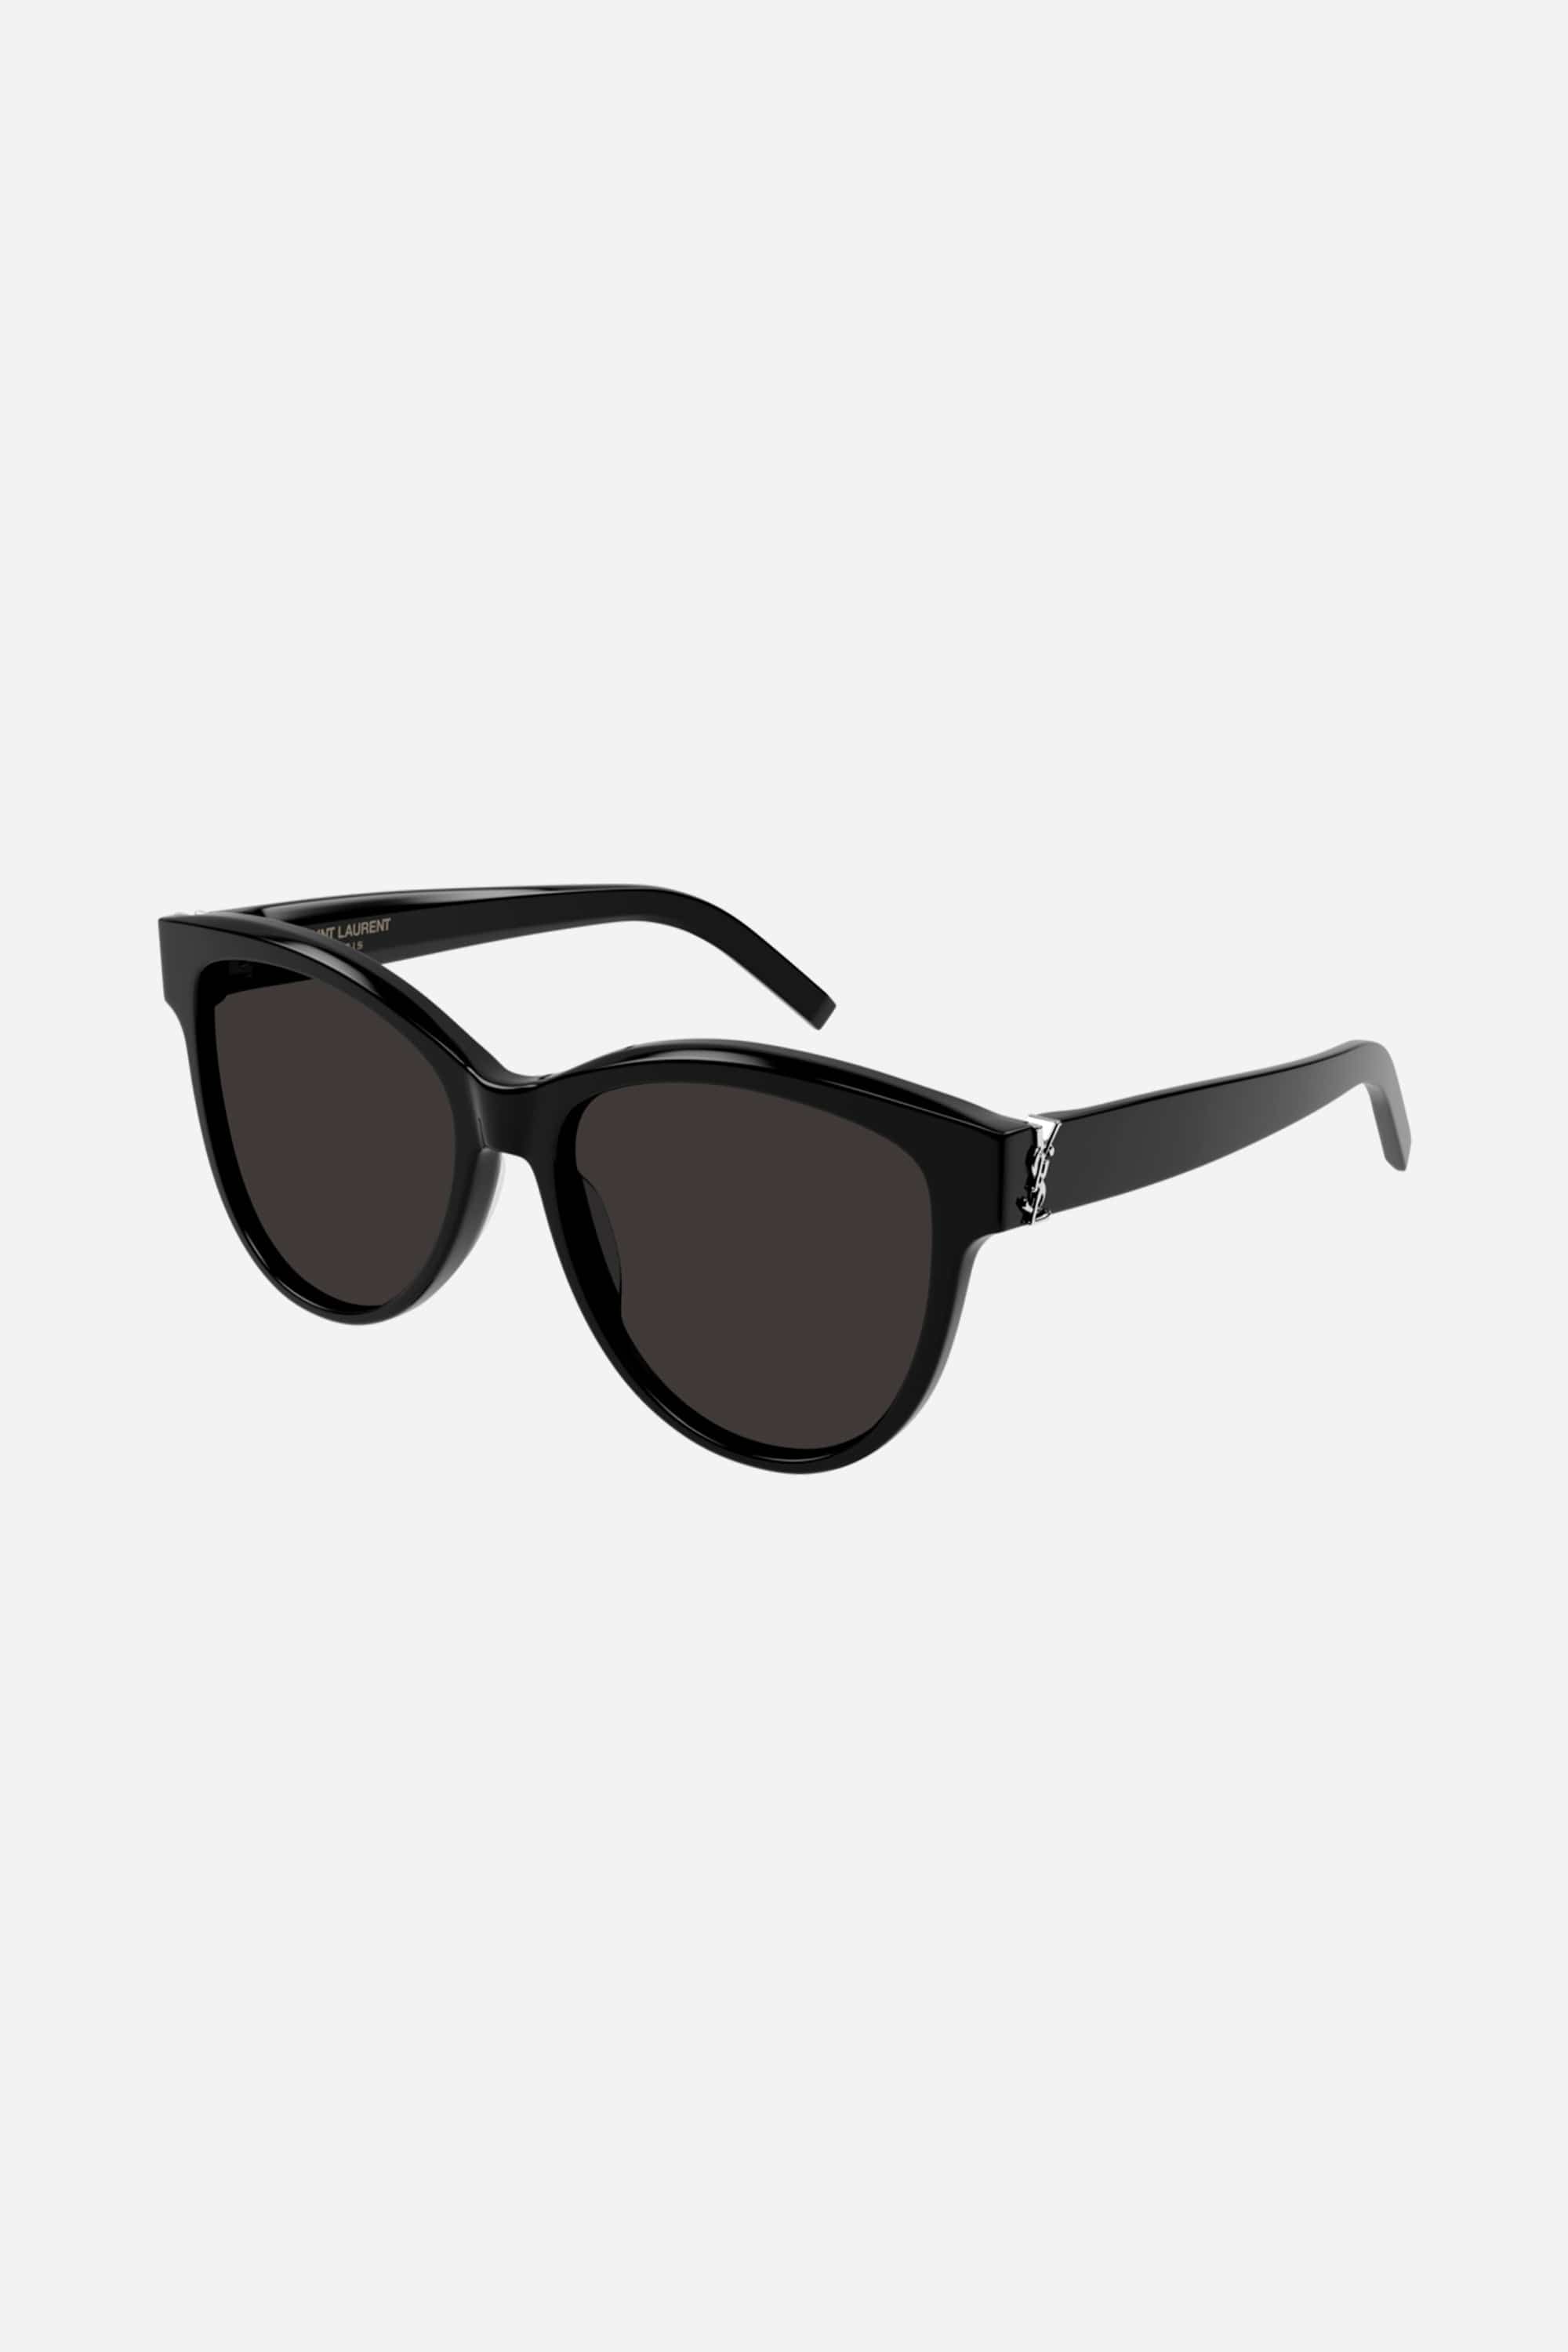 Saint Laurent cat eye YSL black sunglasses - Eyewear Club